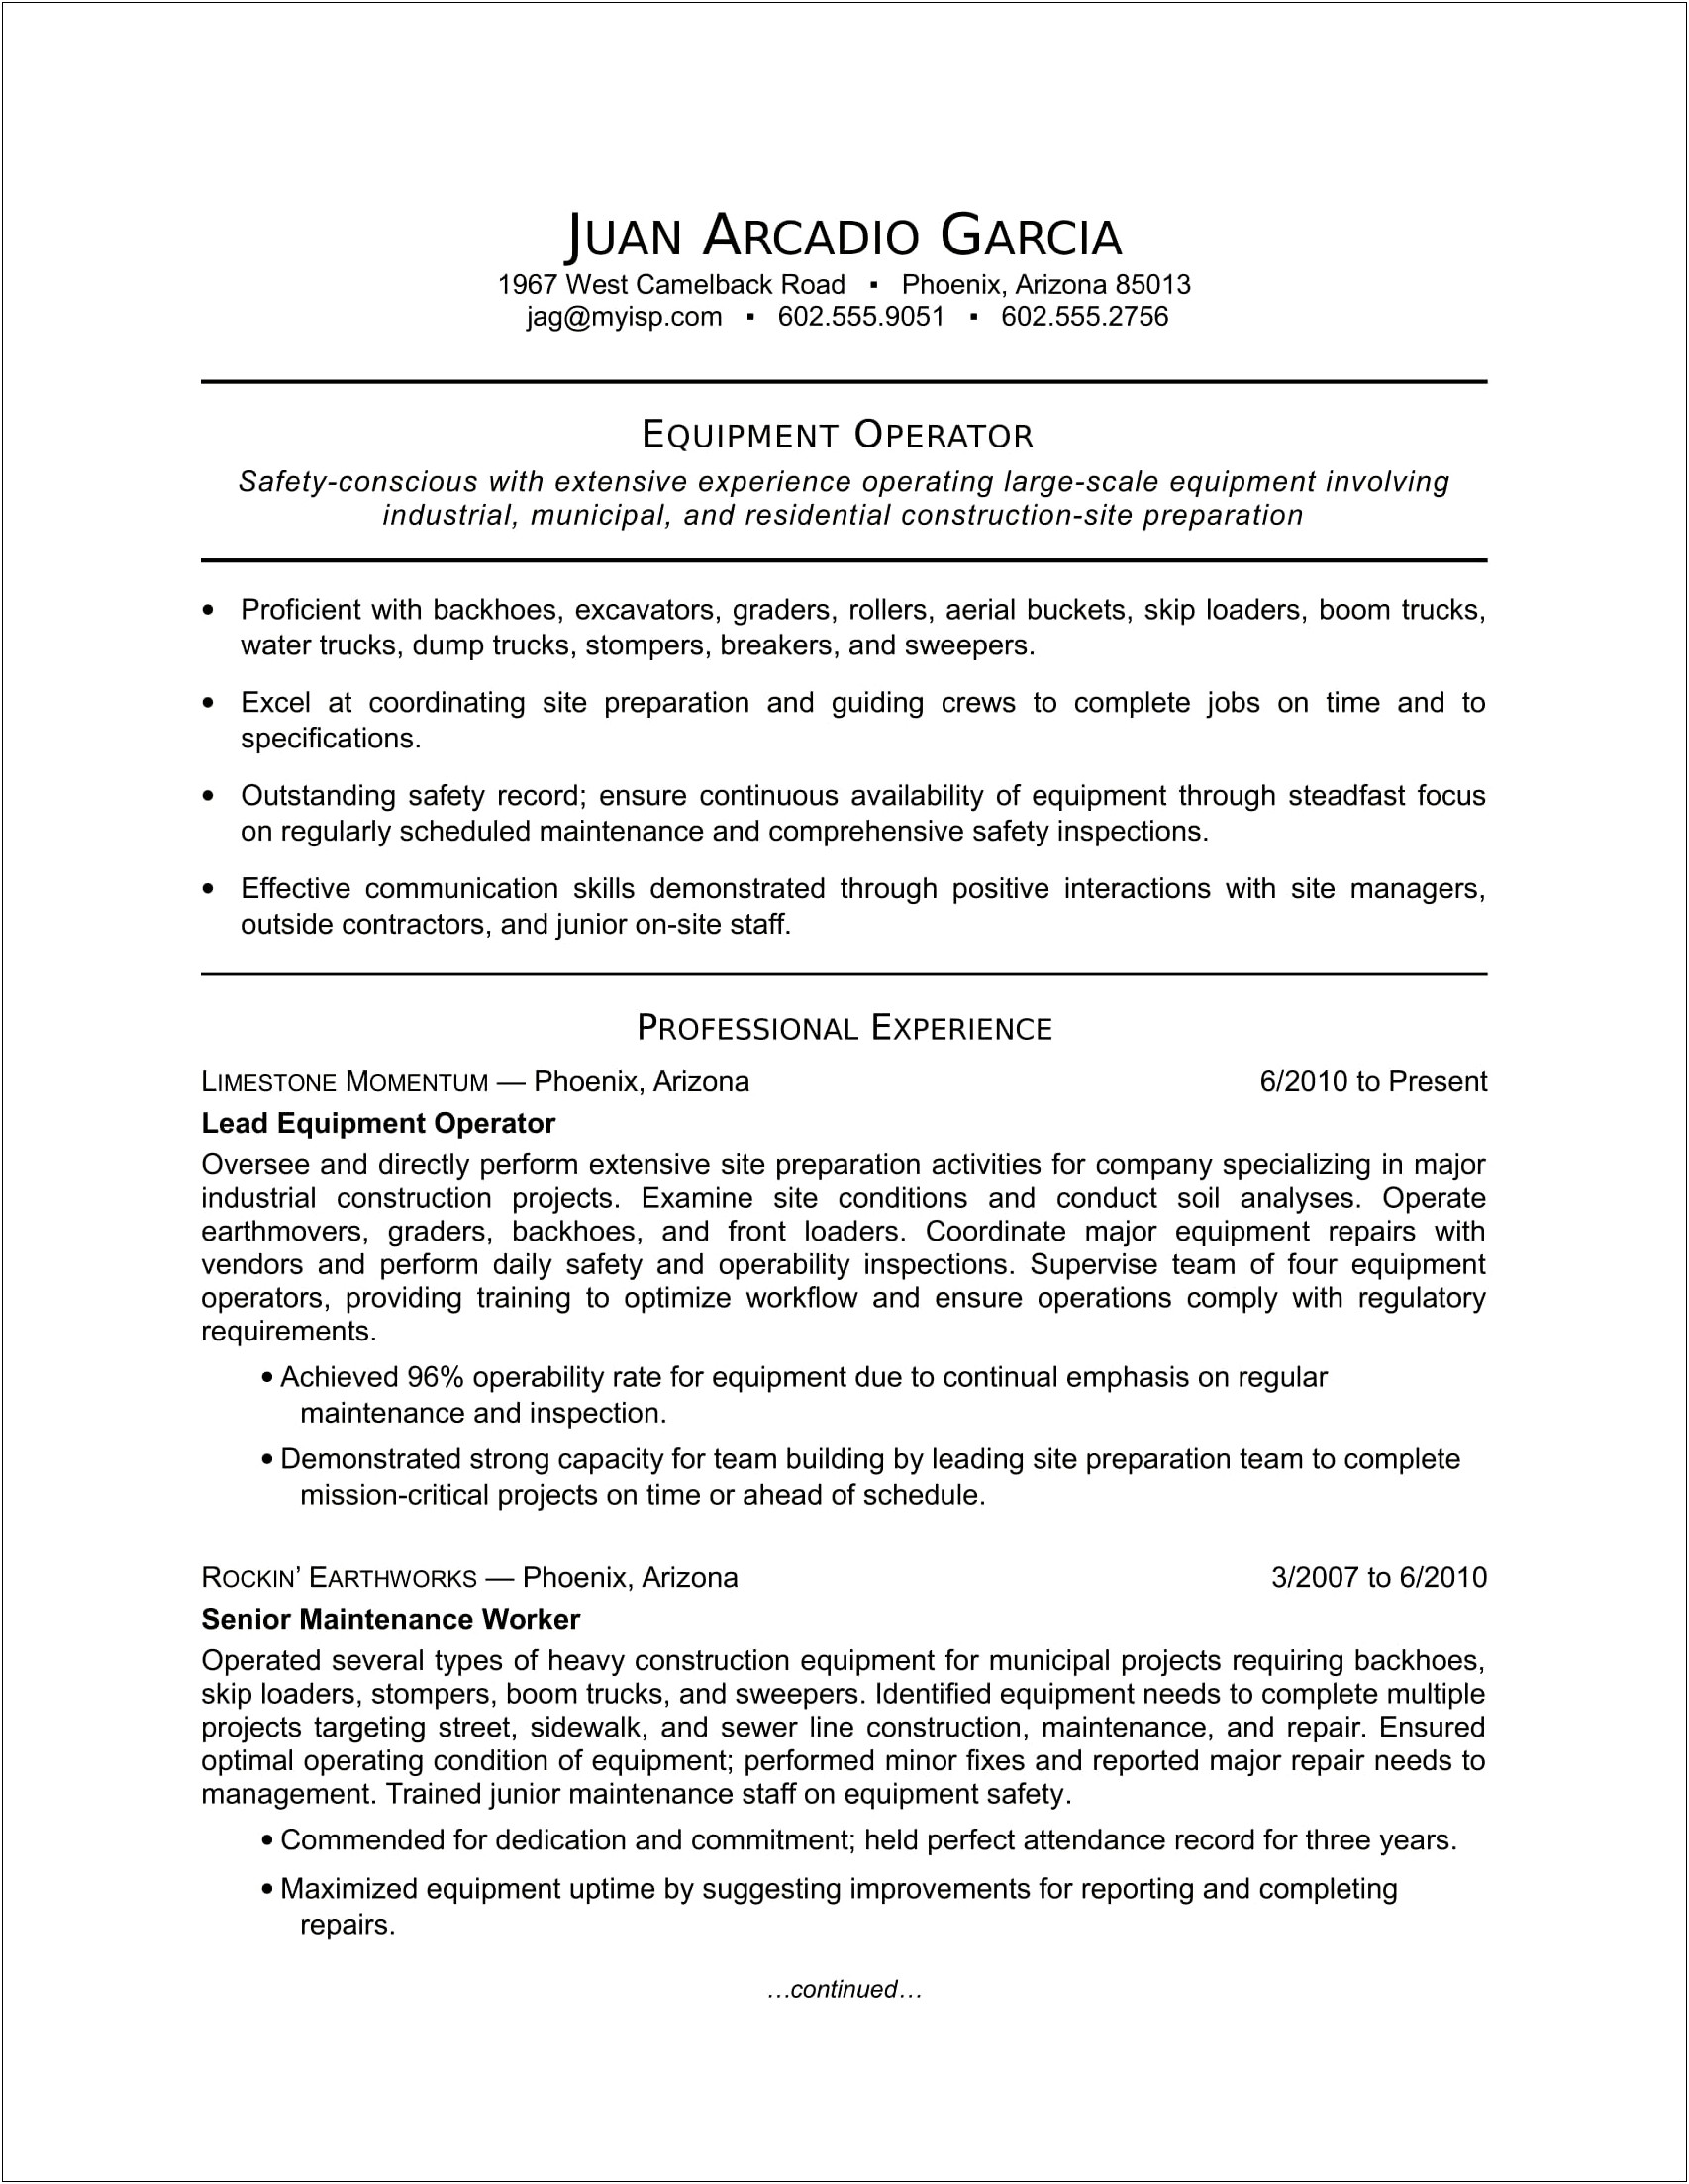 Resume Objective For Equipment Operator